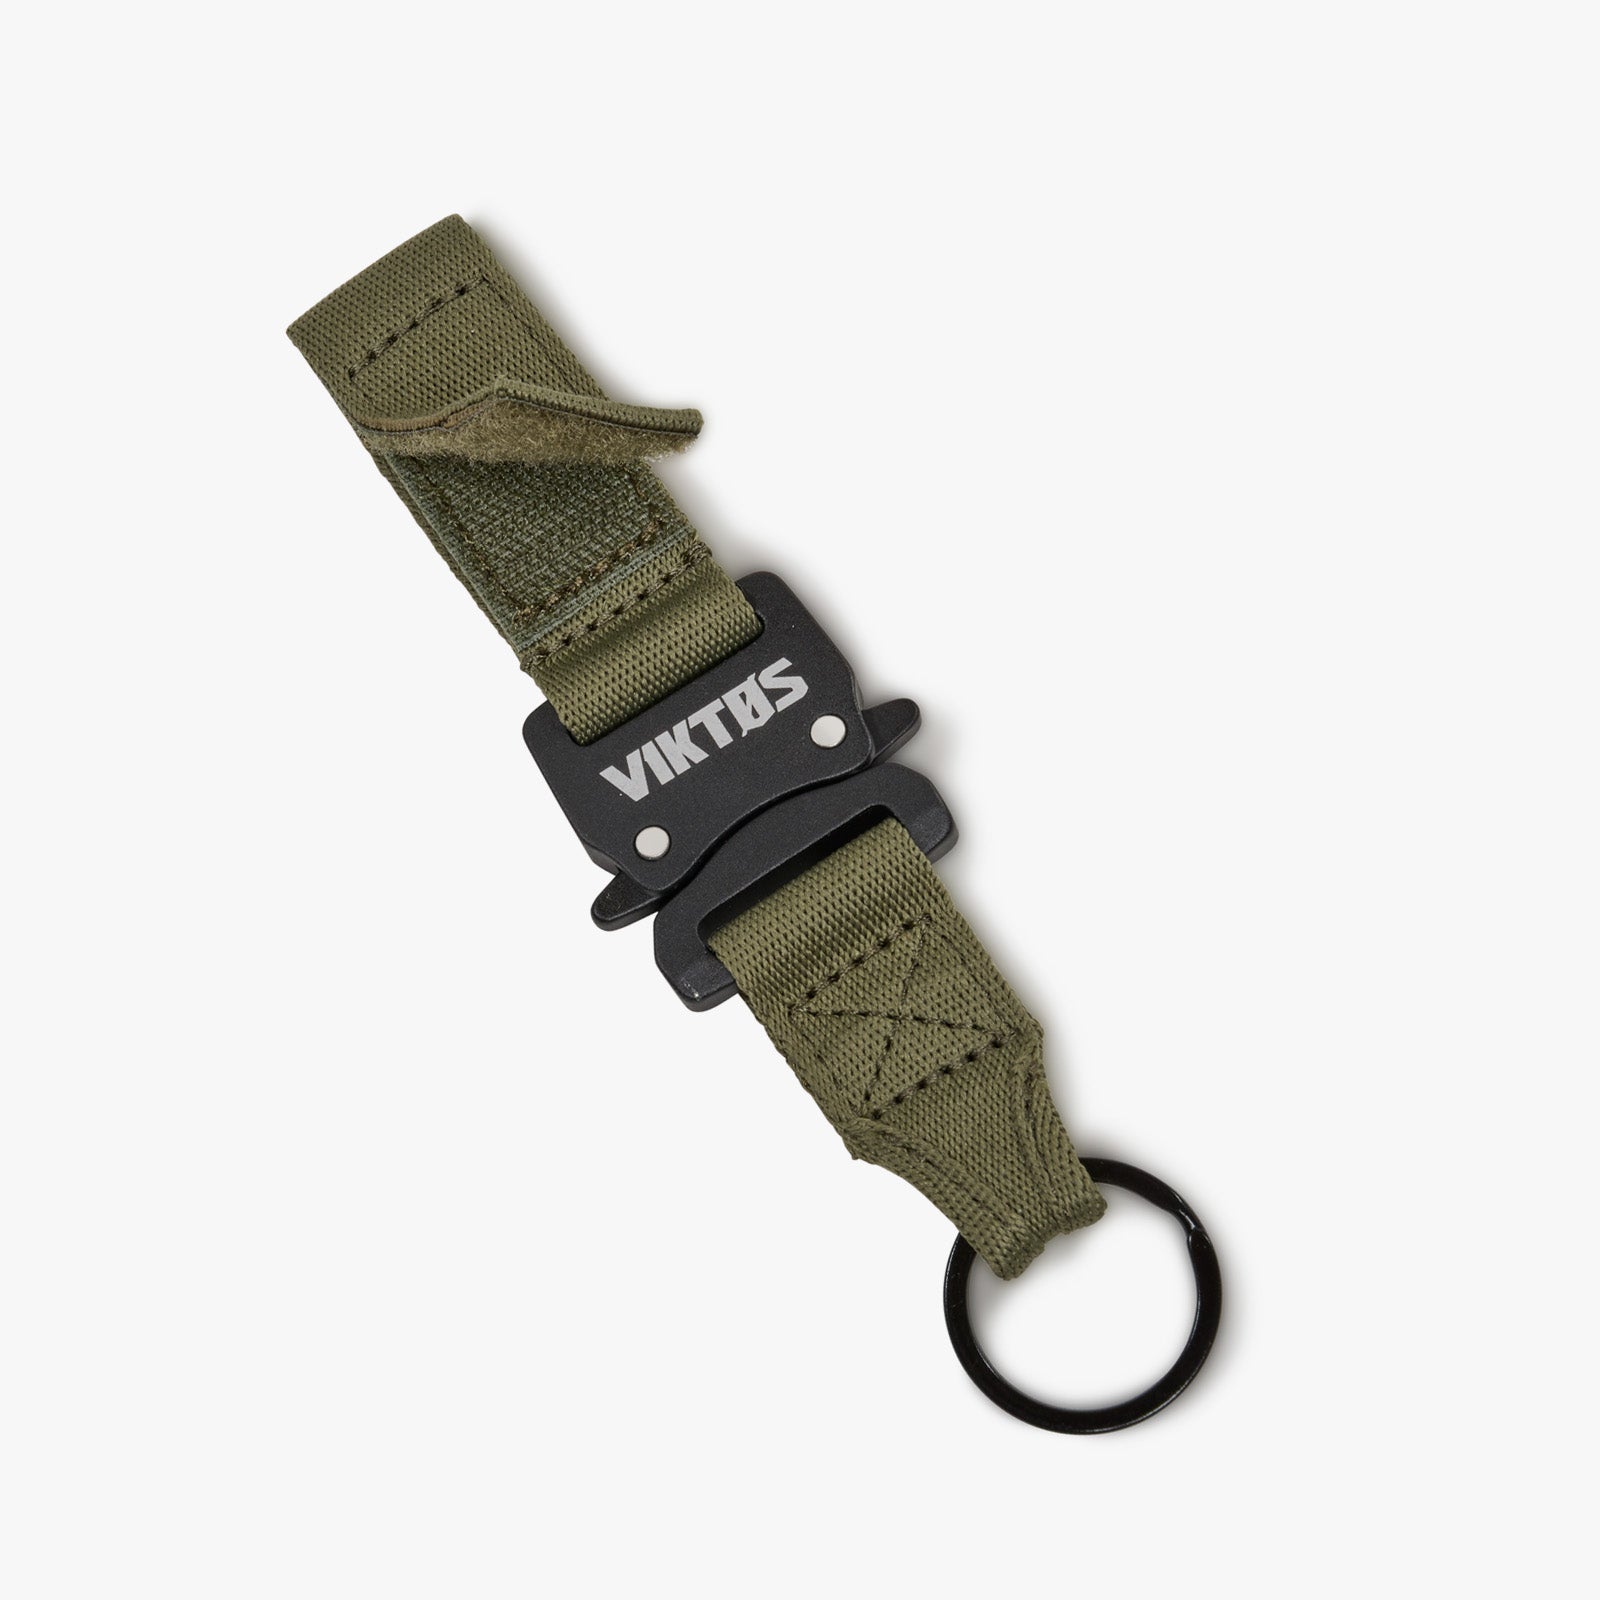 VIKTOS Bulldog Keychain Accessories VIKTOS Ranger Tactical Gear Supplier Tactical Distributors Australia